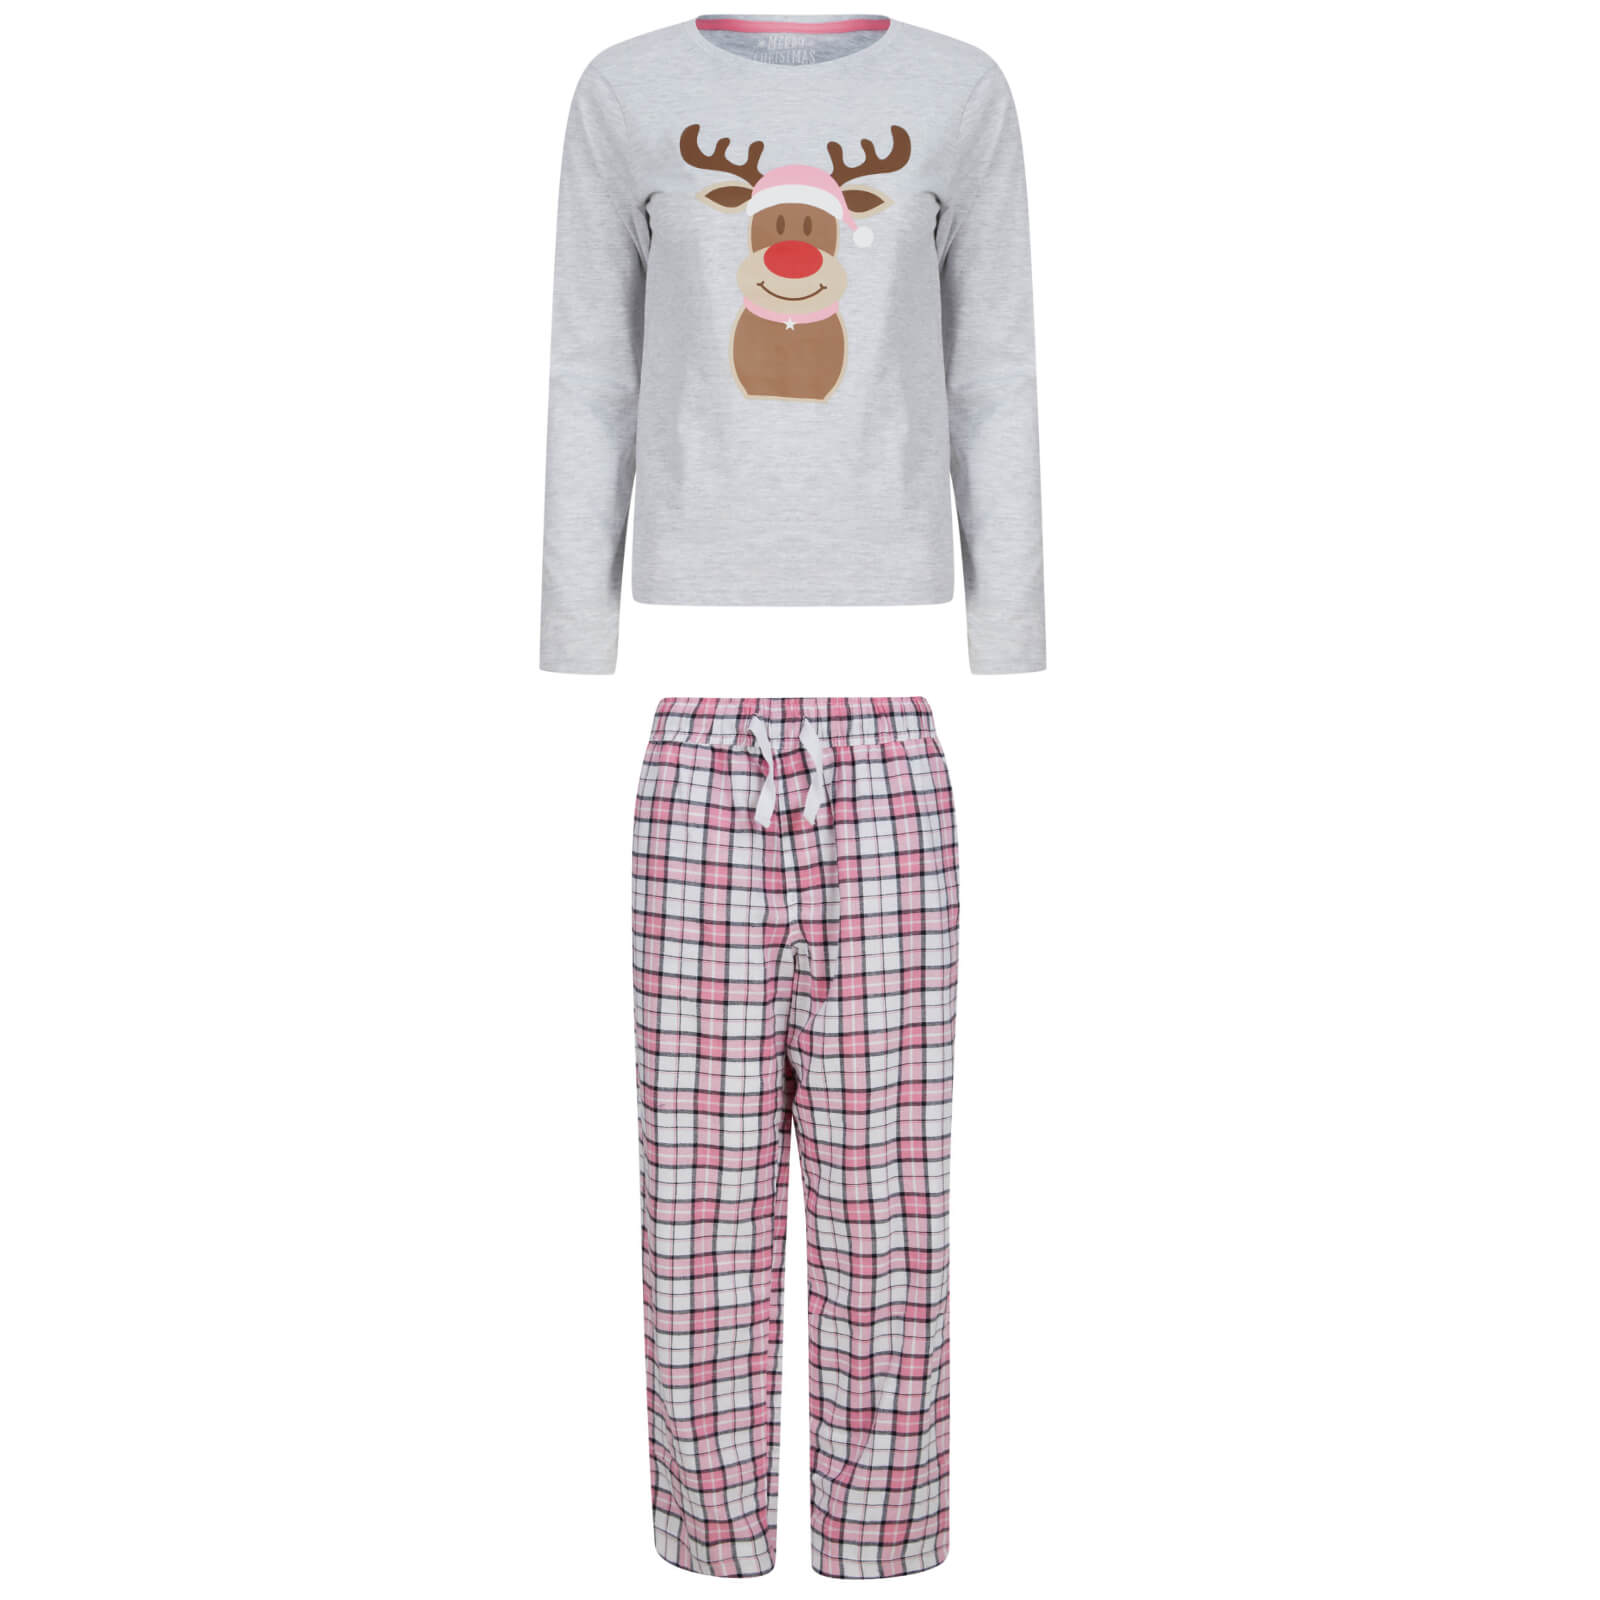 Mr Crimbo Kids Christmas Pyjama Set Rudolph Top Pink Red - MrCrimbo.co.uk -SRG4Q17466_F - Grey/Pink -11-13